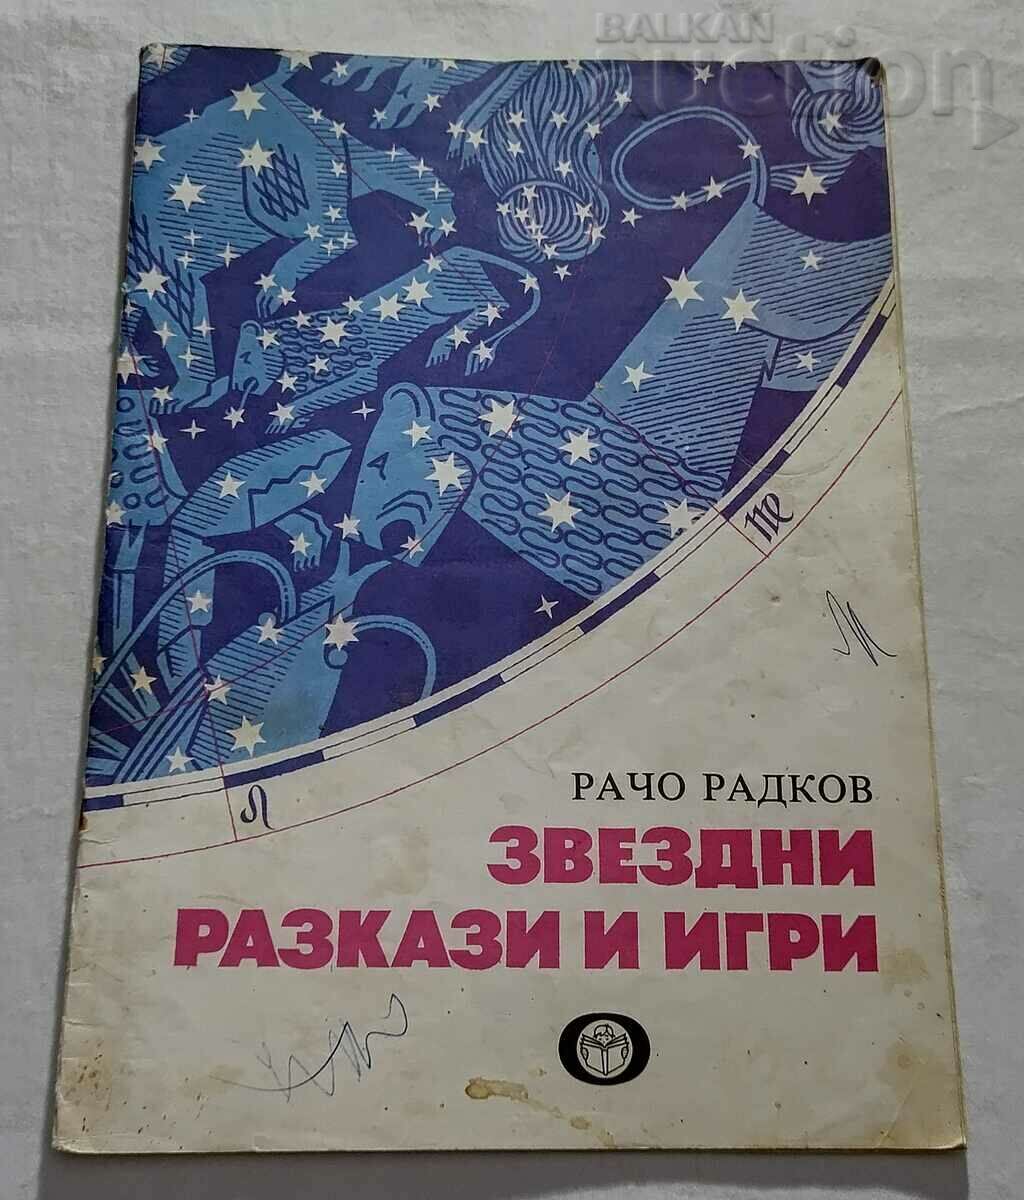 STAR STORIES AND GAMES RACHO RADKOV 1985